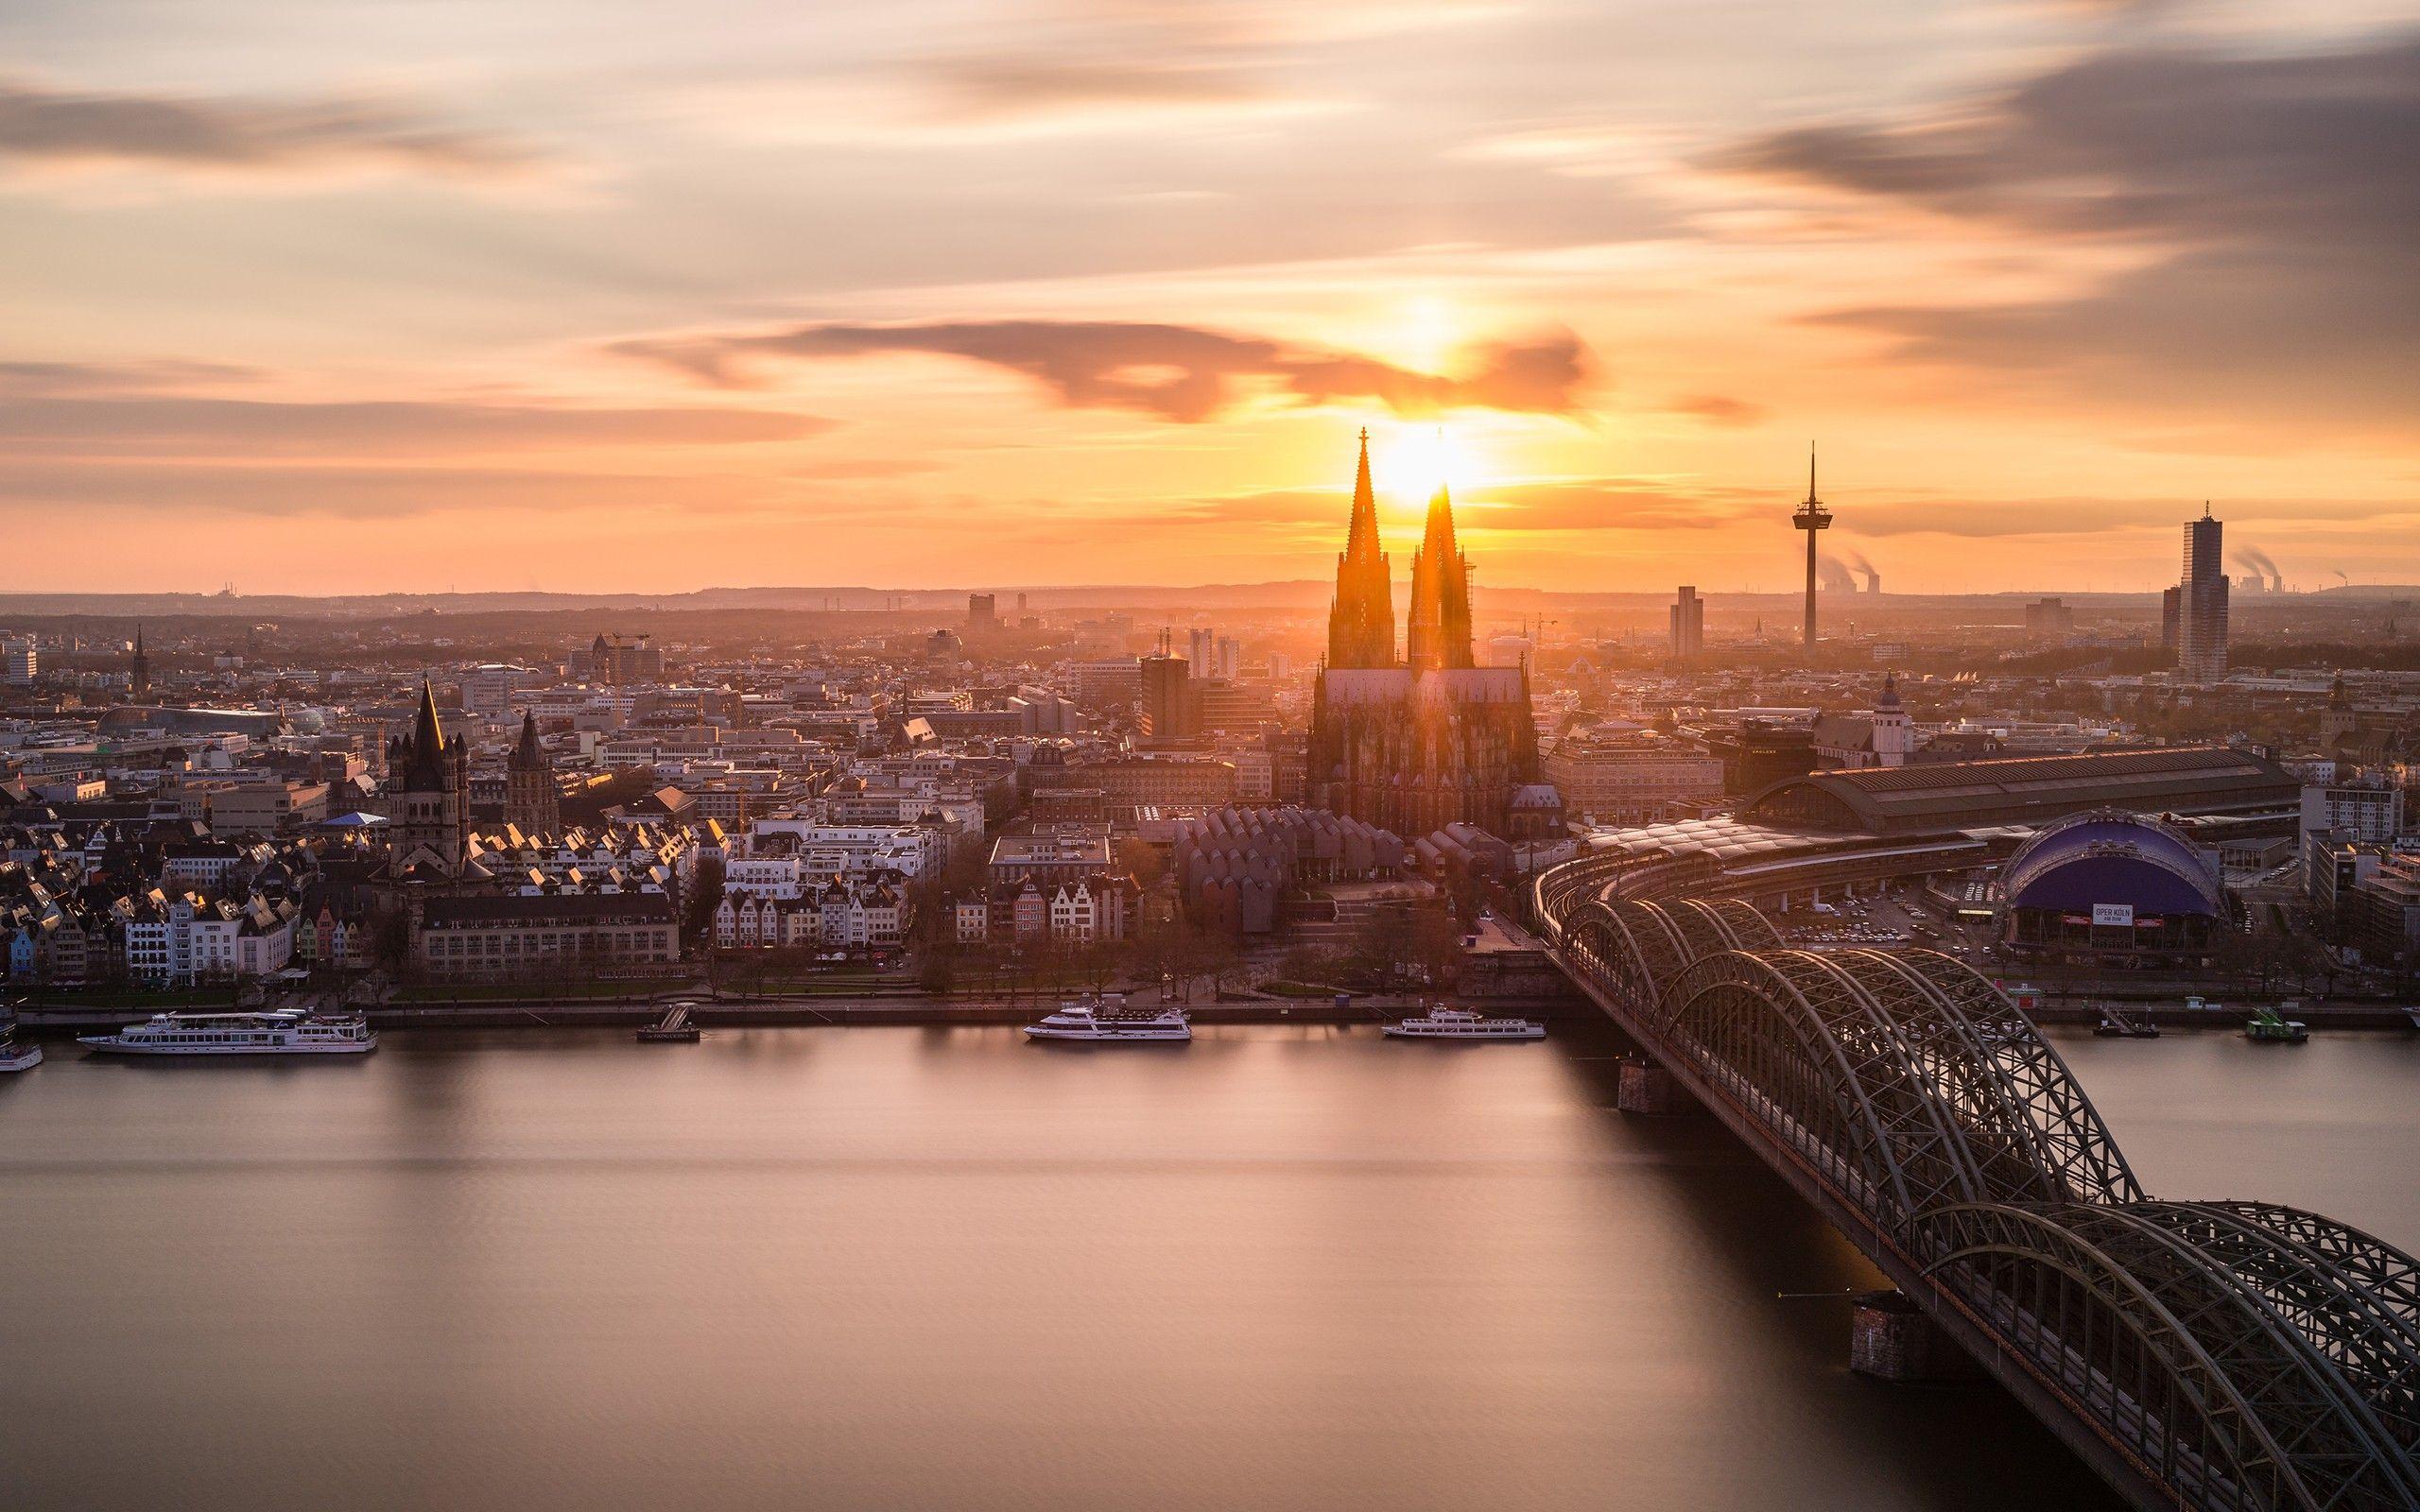 Cologne, Köln, Germany, Sunset, Cologne Cathedral, Rhein